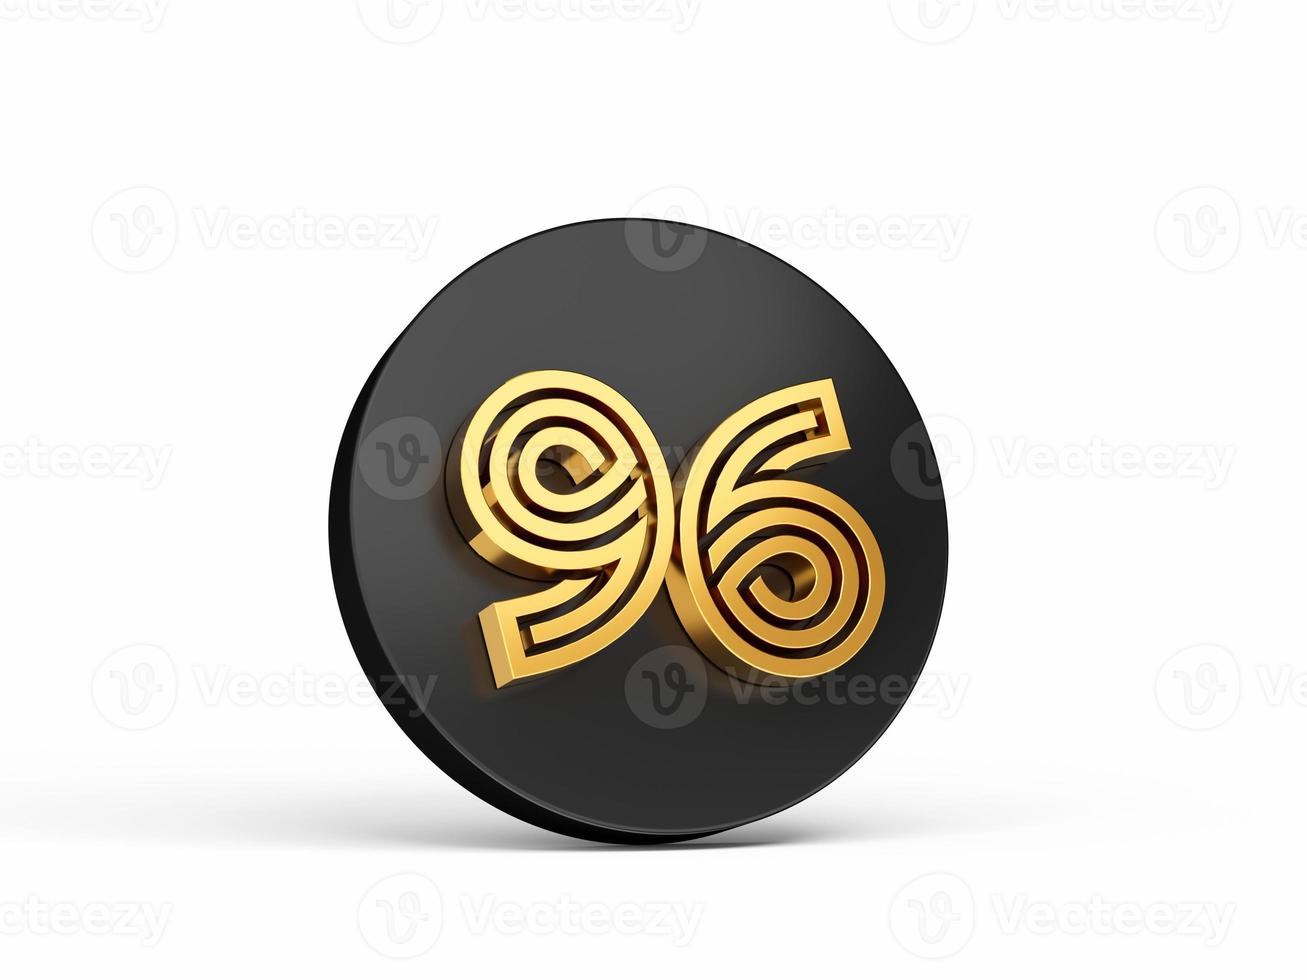 Royal Gold Modern Font. Elite 3D Digit Letter 96 Ninety six on Black 3d button icon 3d Illustration photo